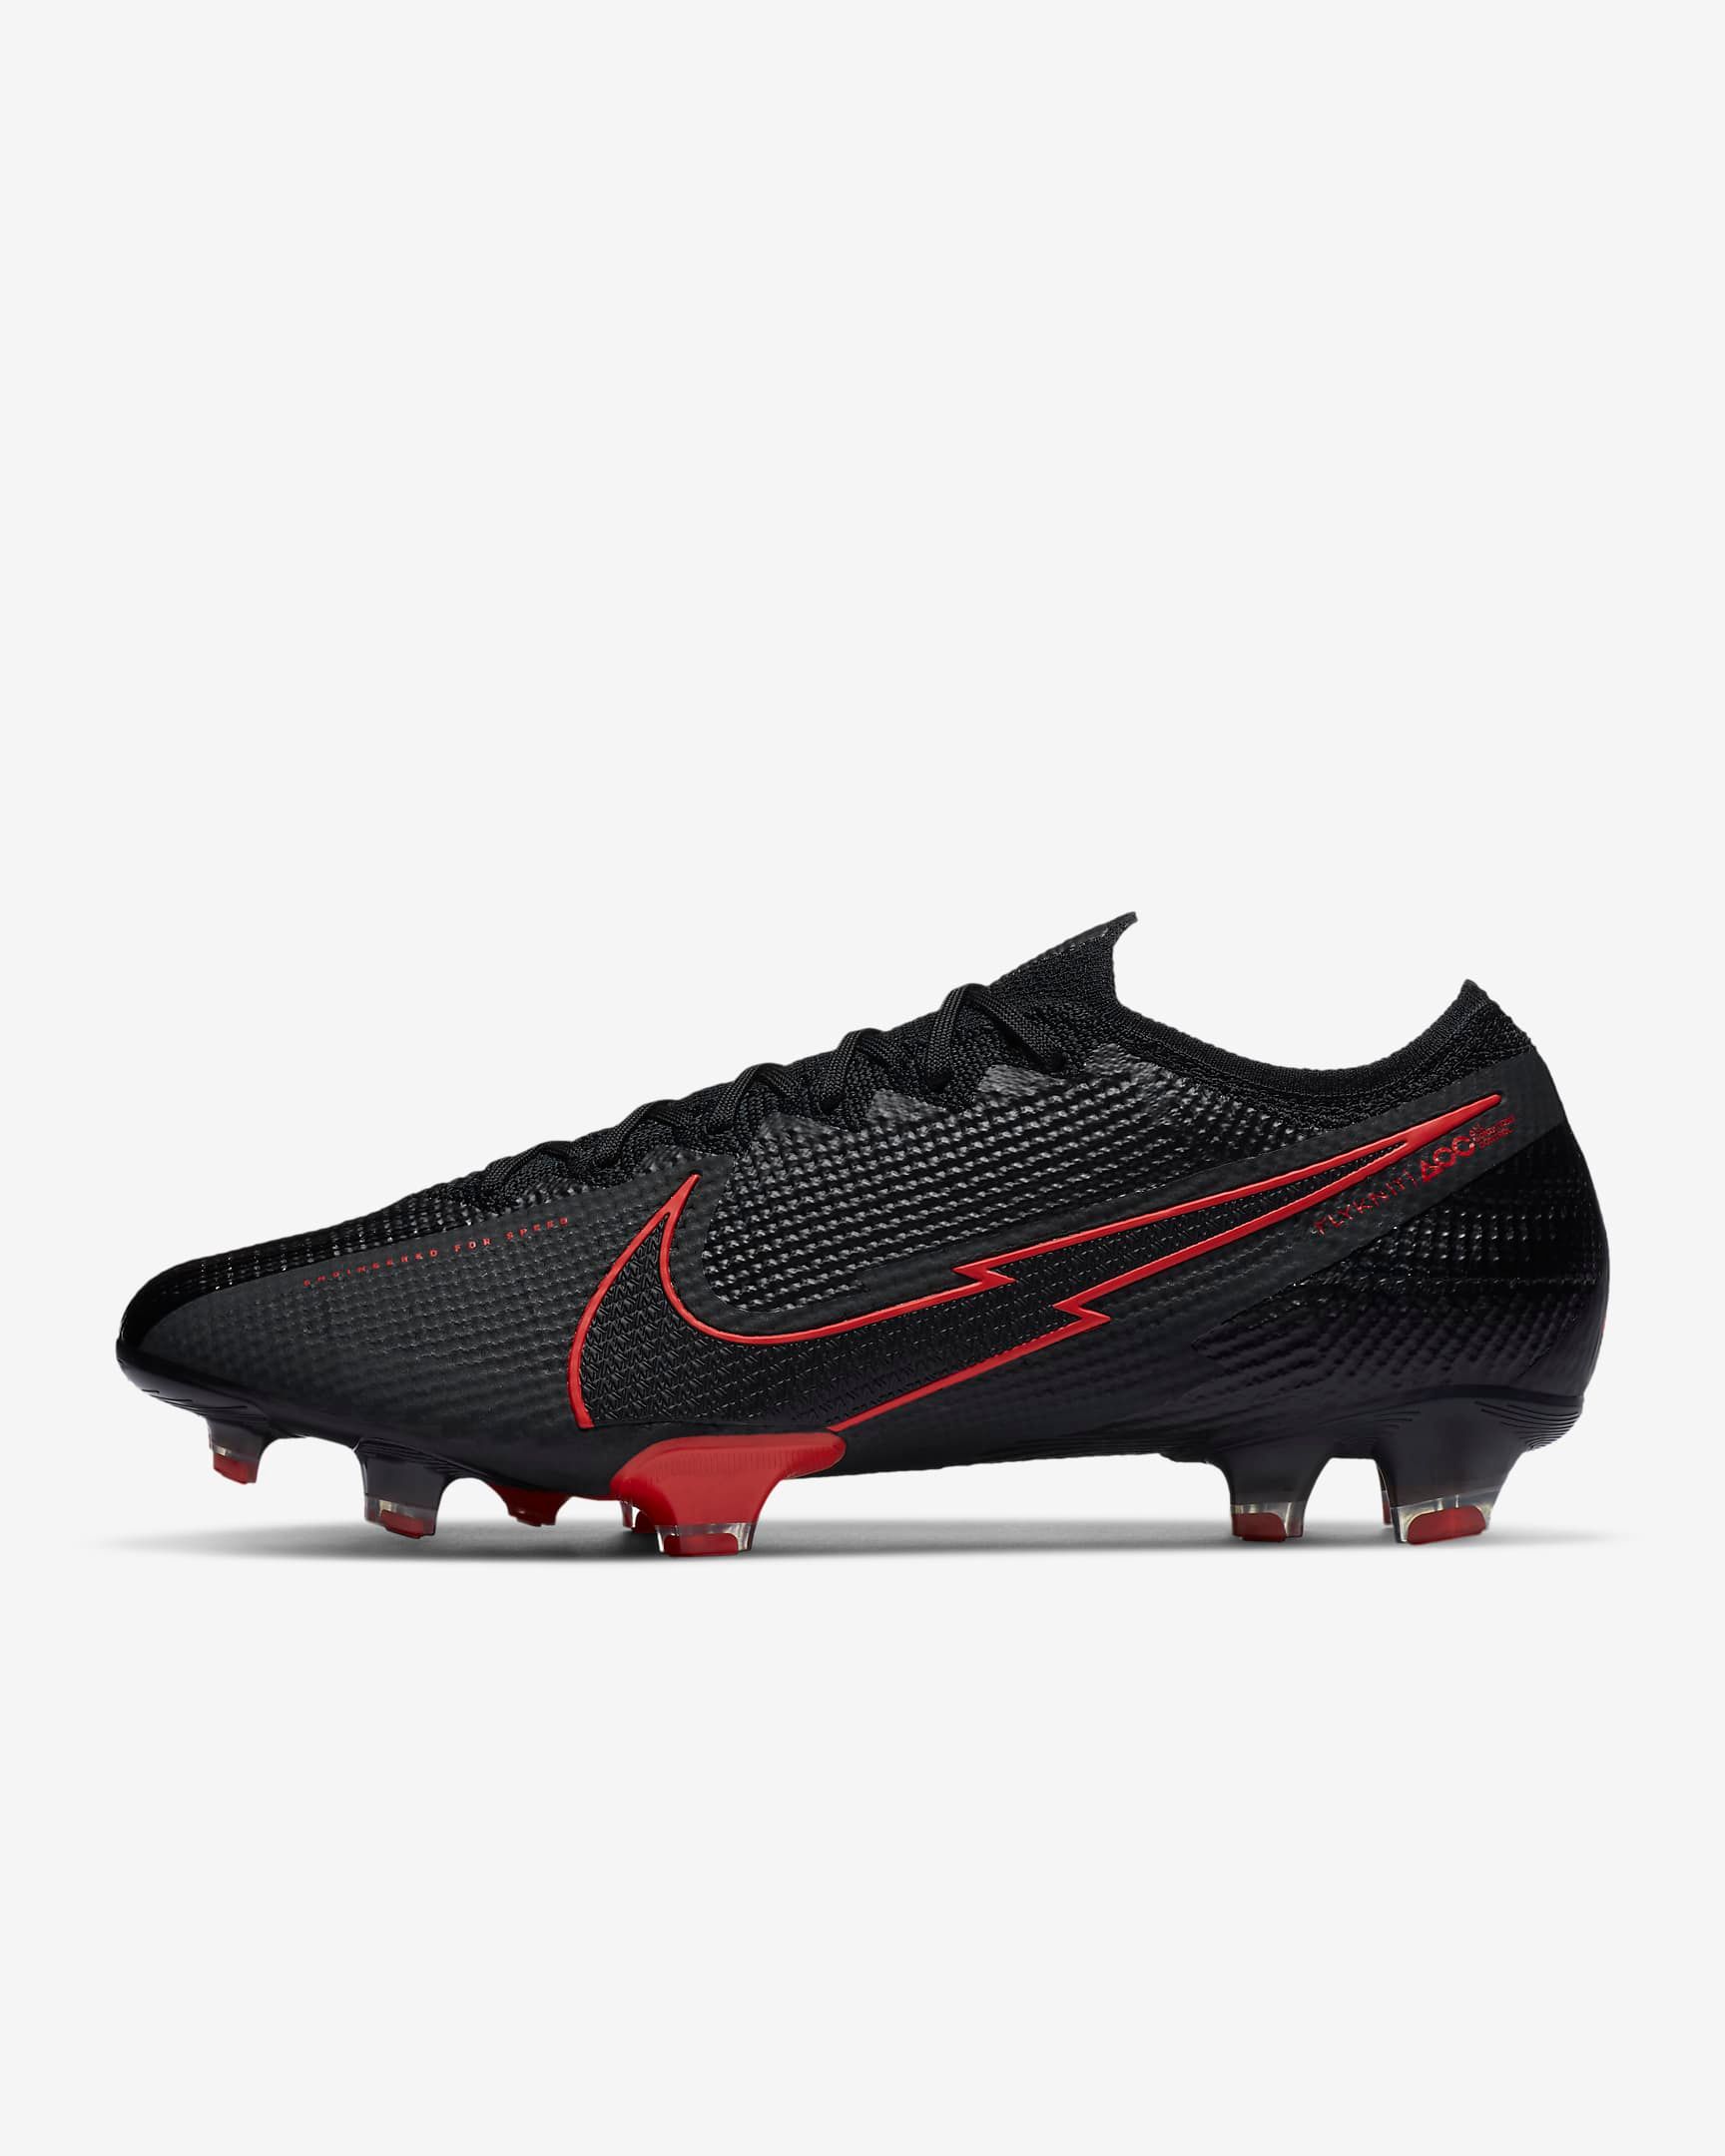 Soccer Cleats Shoes Football Boots Spikes Mizuno Rebula 3 JAPAN P1GA196009 